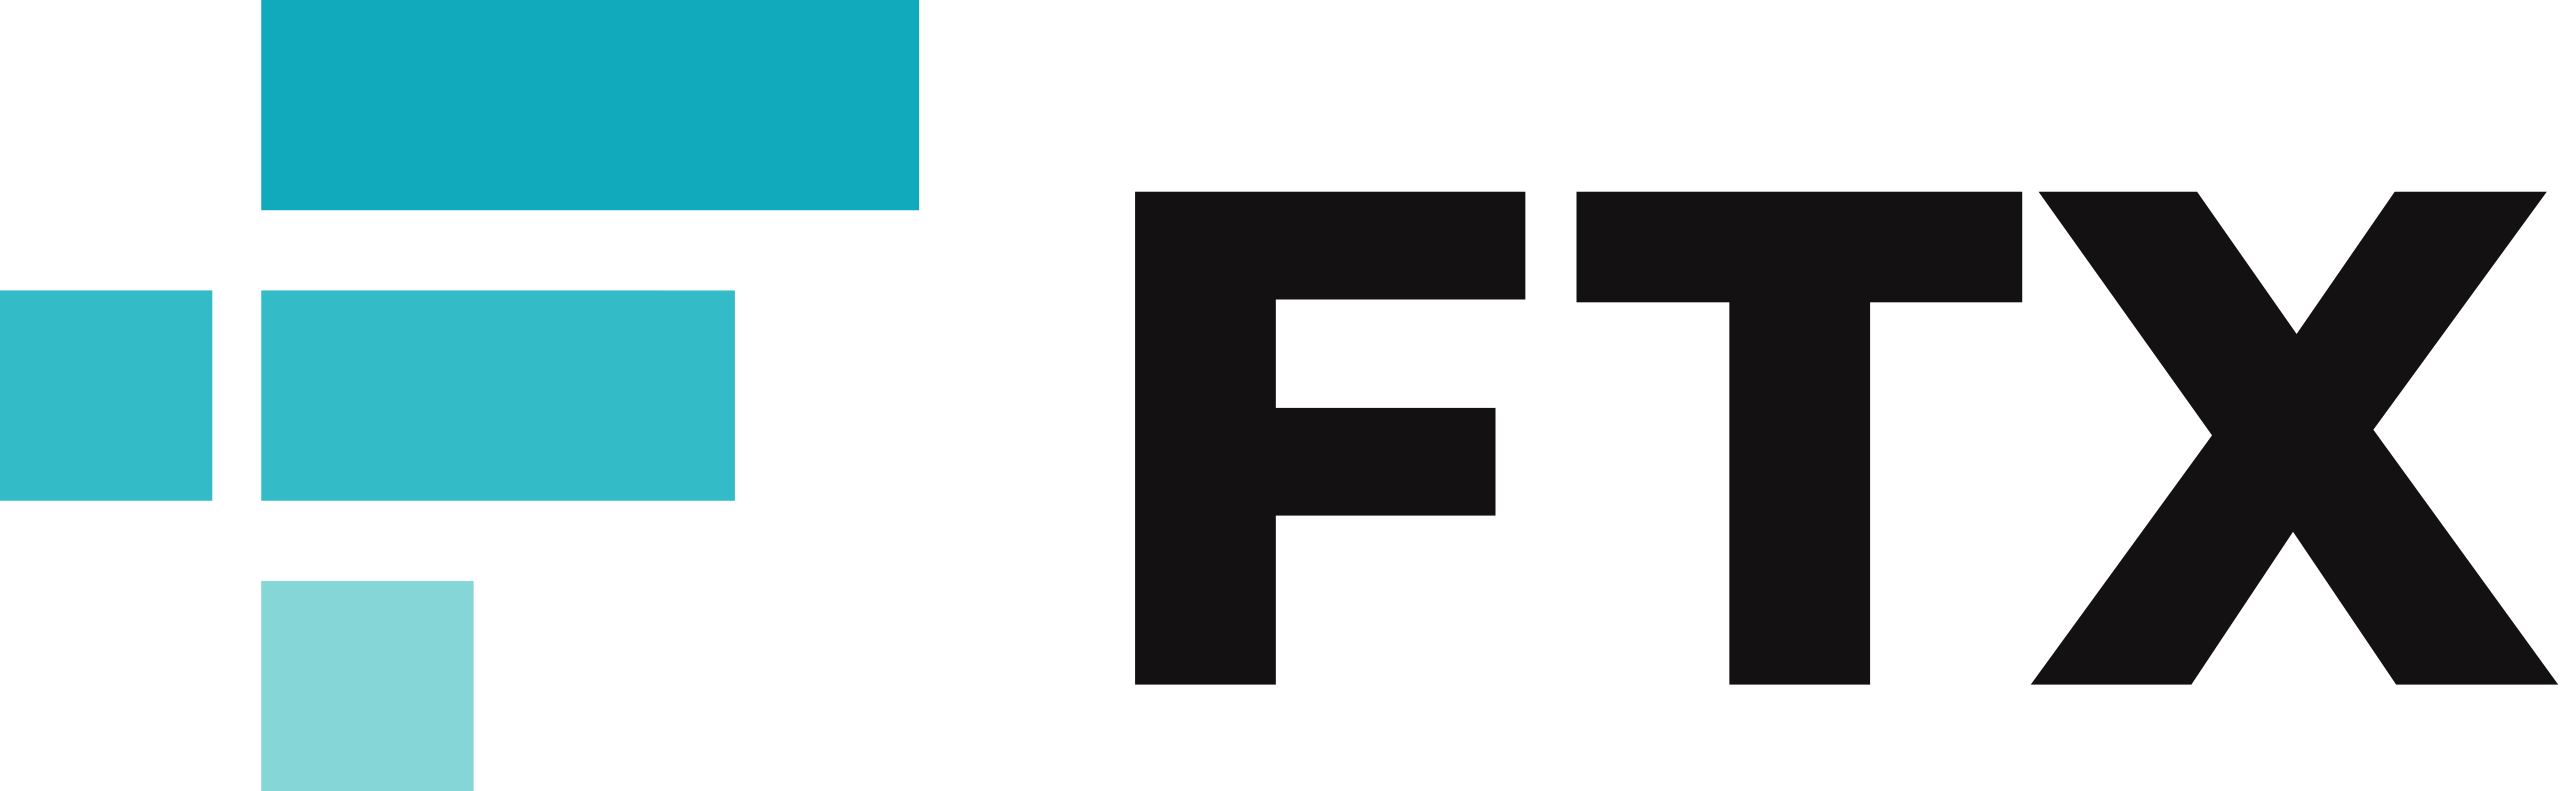 File:FTX logo.svg - Wikimedia Commons